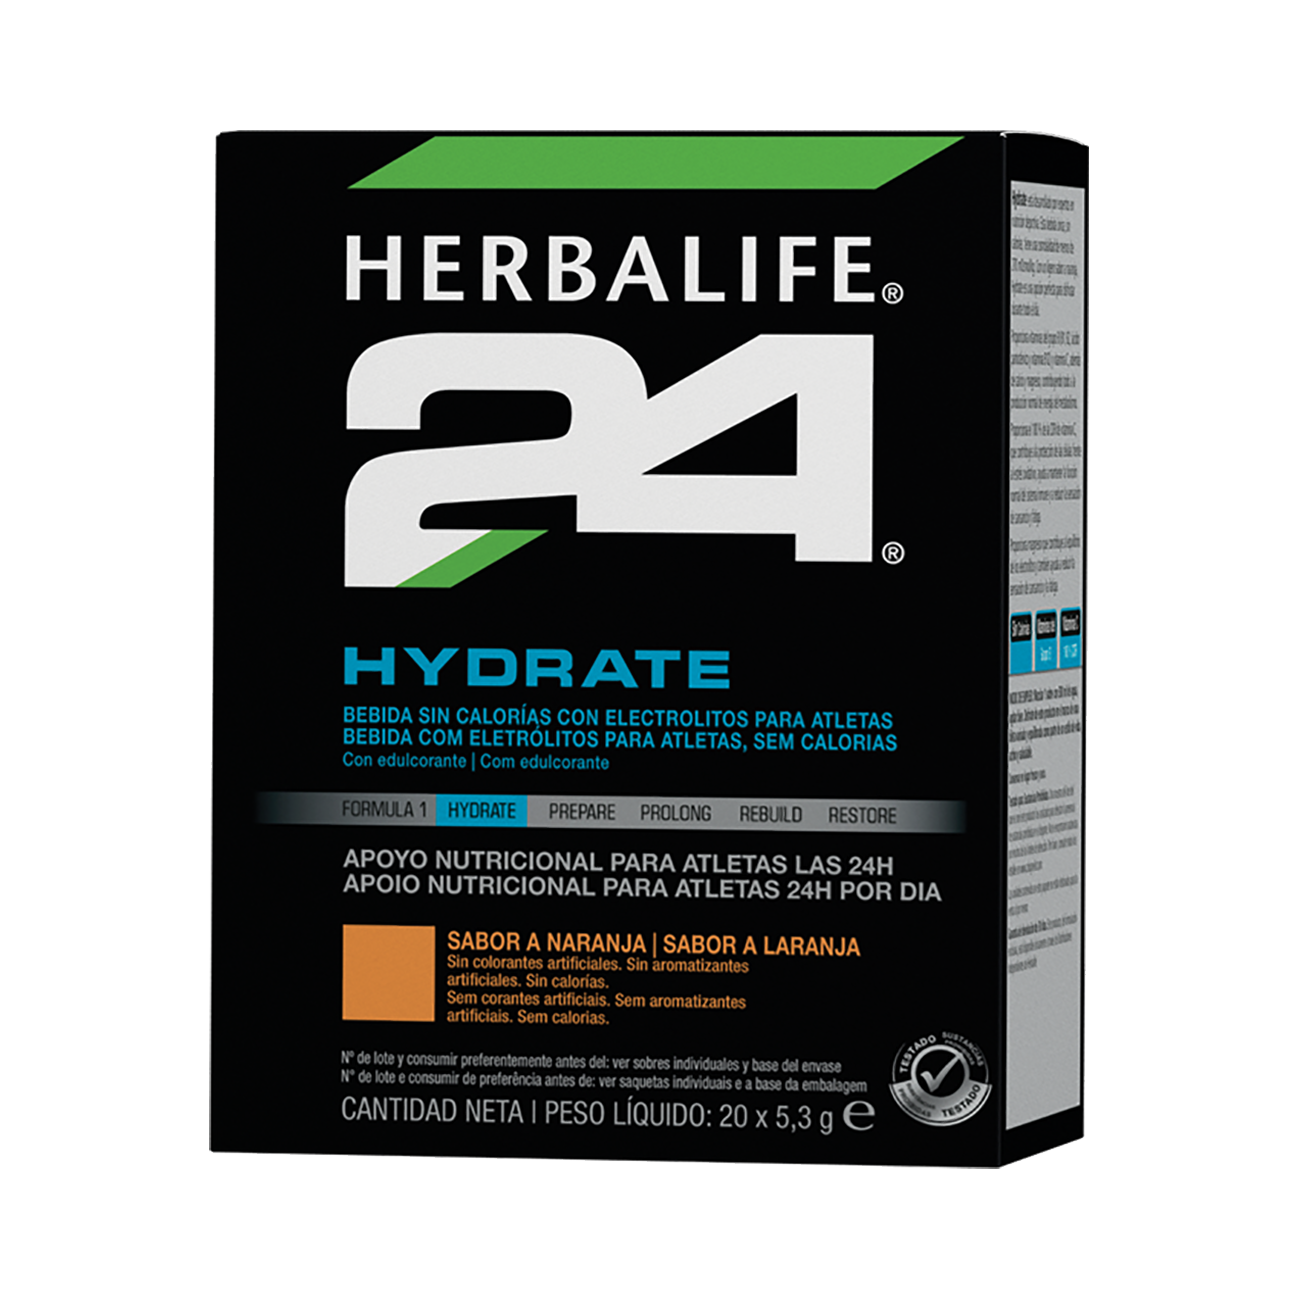 Herbalife 24 Hydrate Nutrição Desportiva - Eletrólitos Laranja product shot